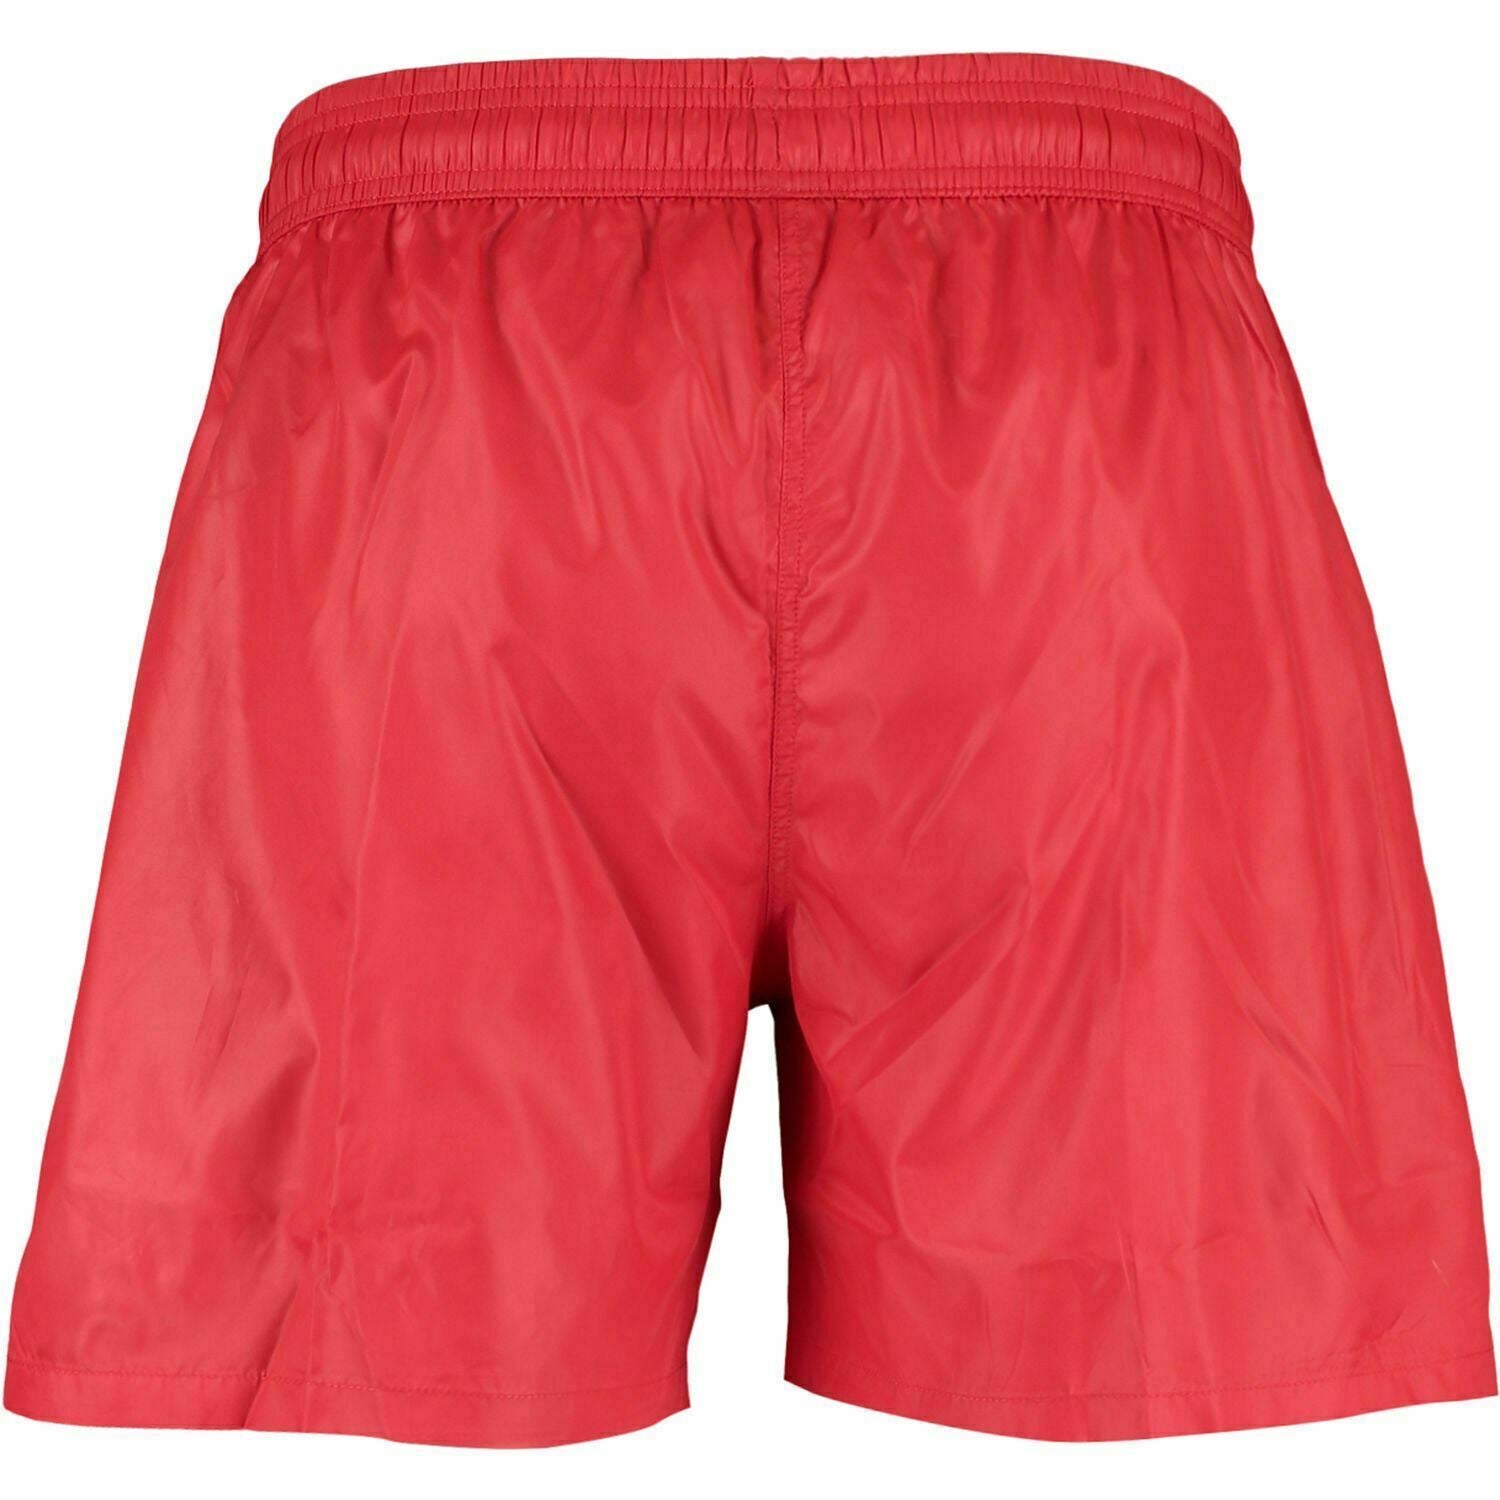 JOHN RICHMOND Men's Swimboxer OLIMPO Swim Shorts, Tomato Red, size S